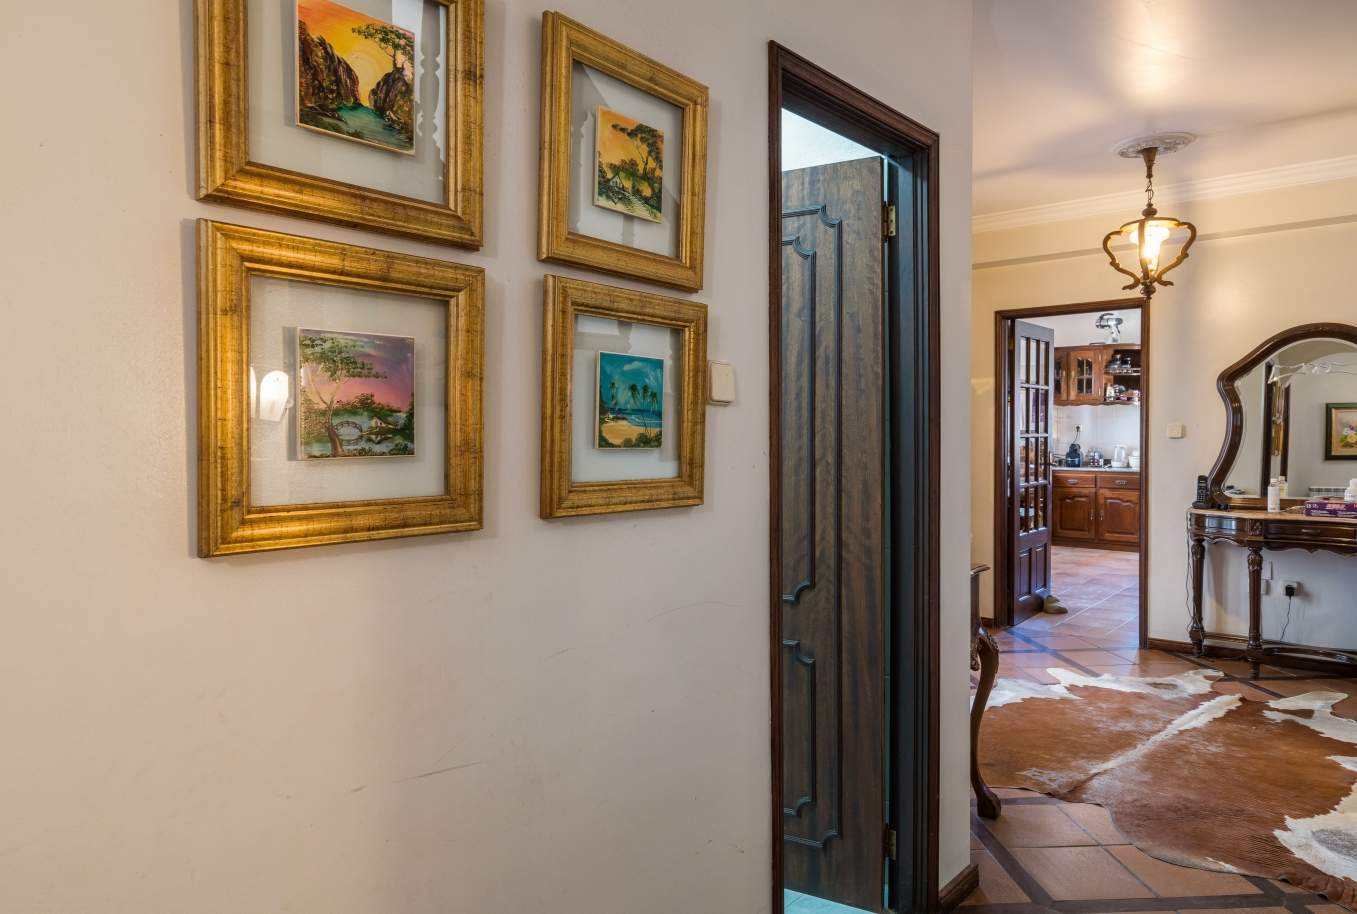 4 Bedroom Villa with plot of land, sale, Albufeira, Algarve, Portugal_143765